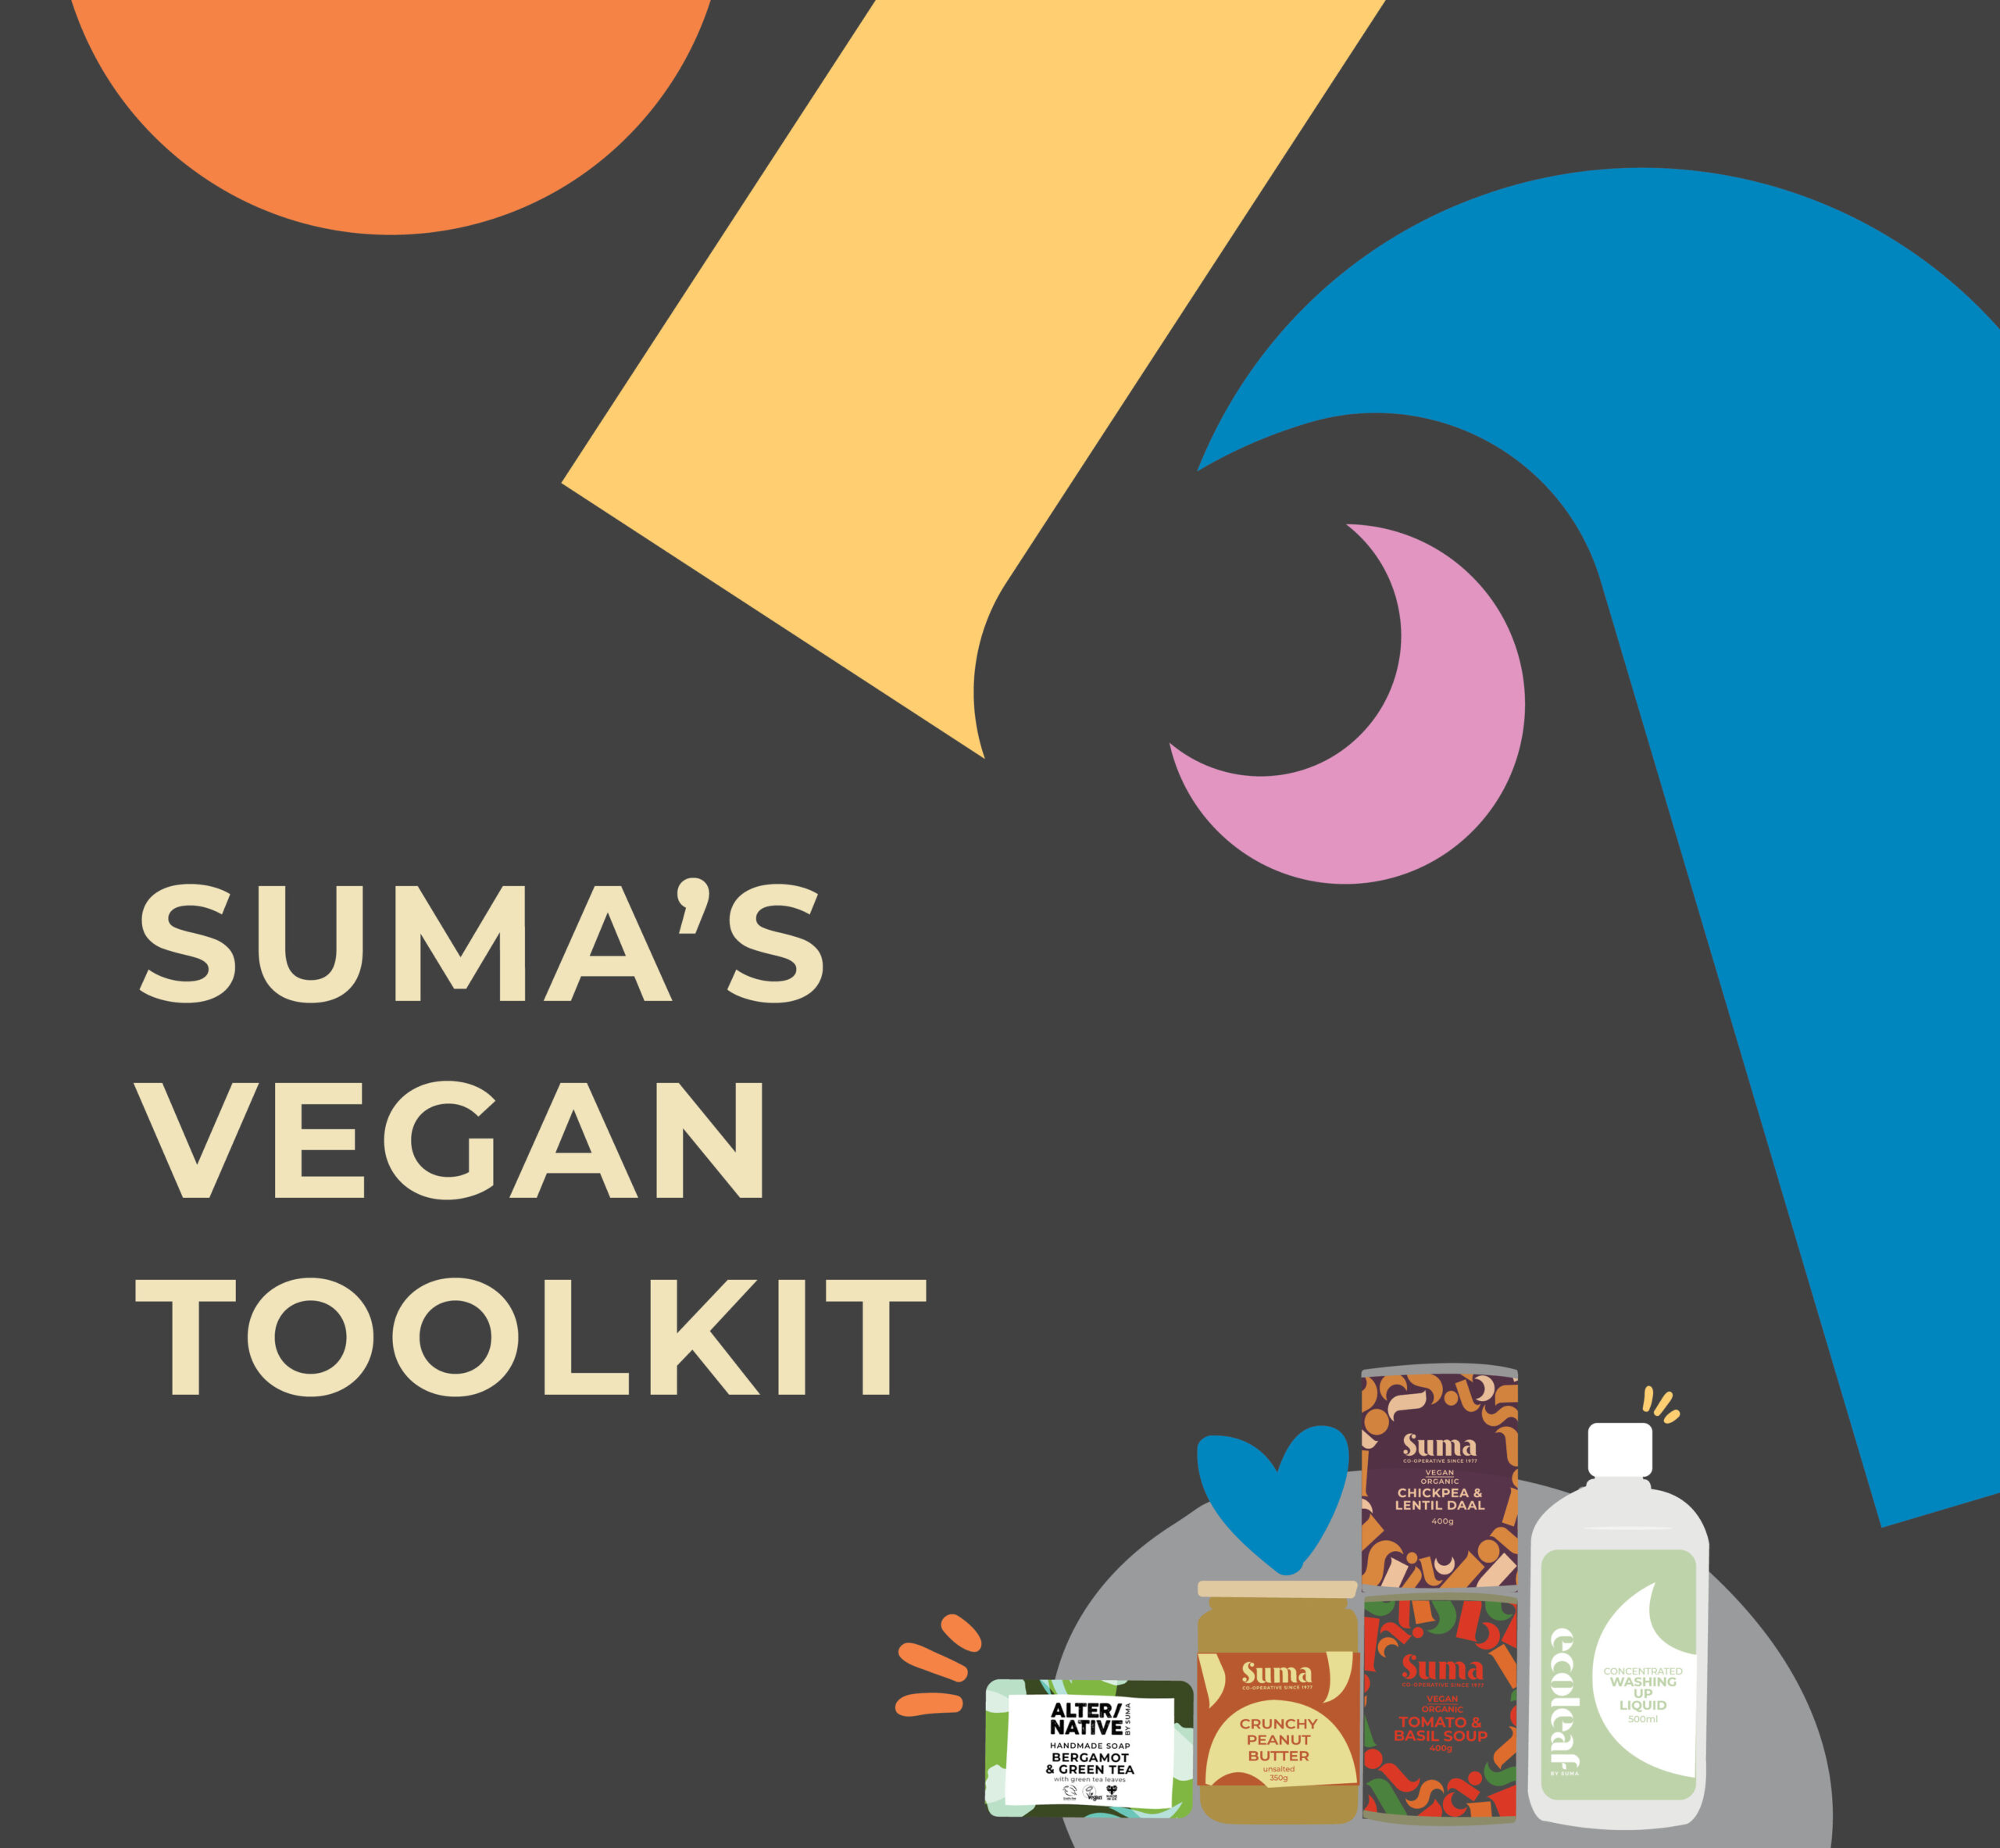 Suma’s Vegan Toolkit